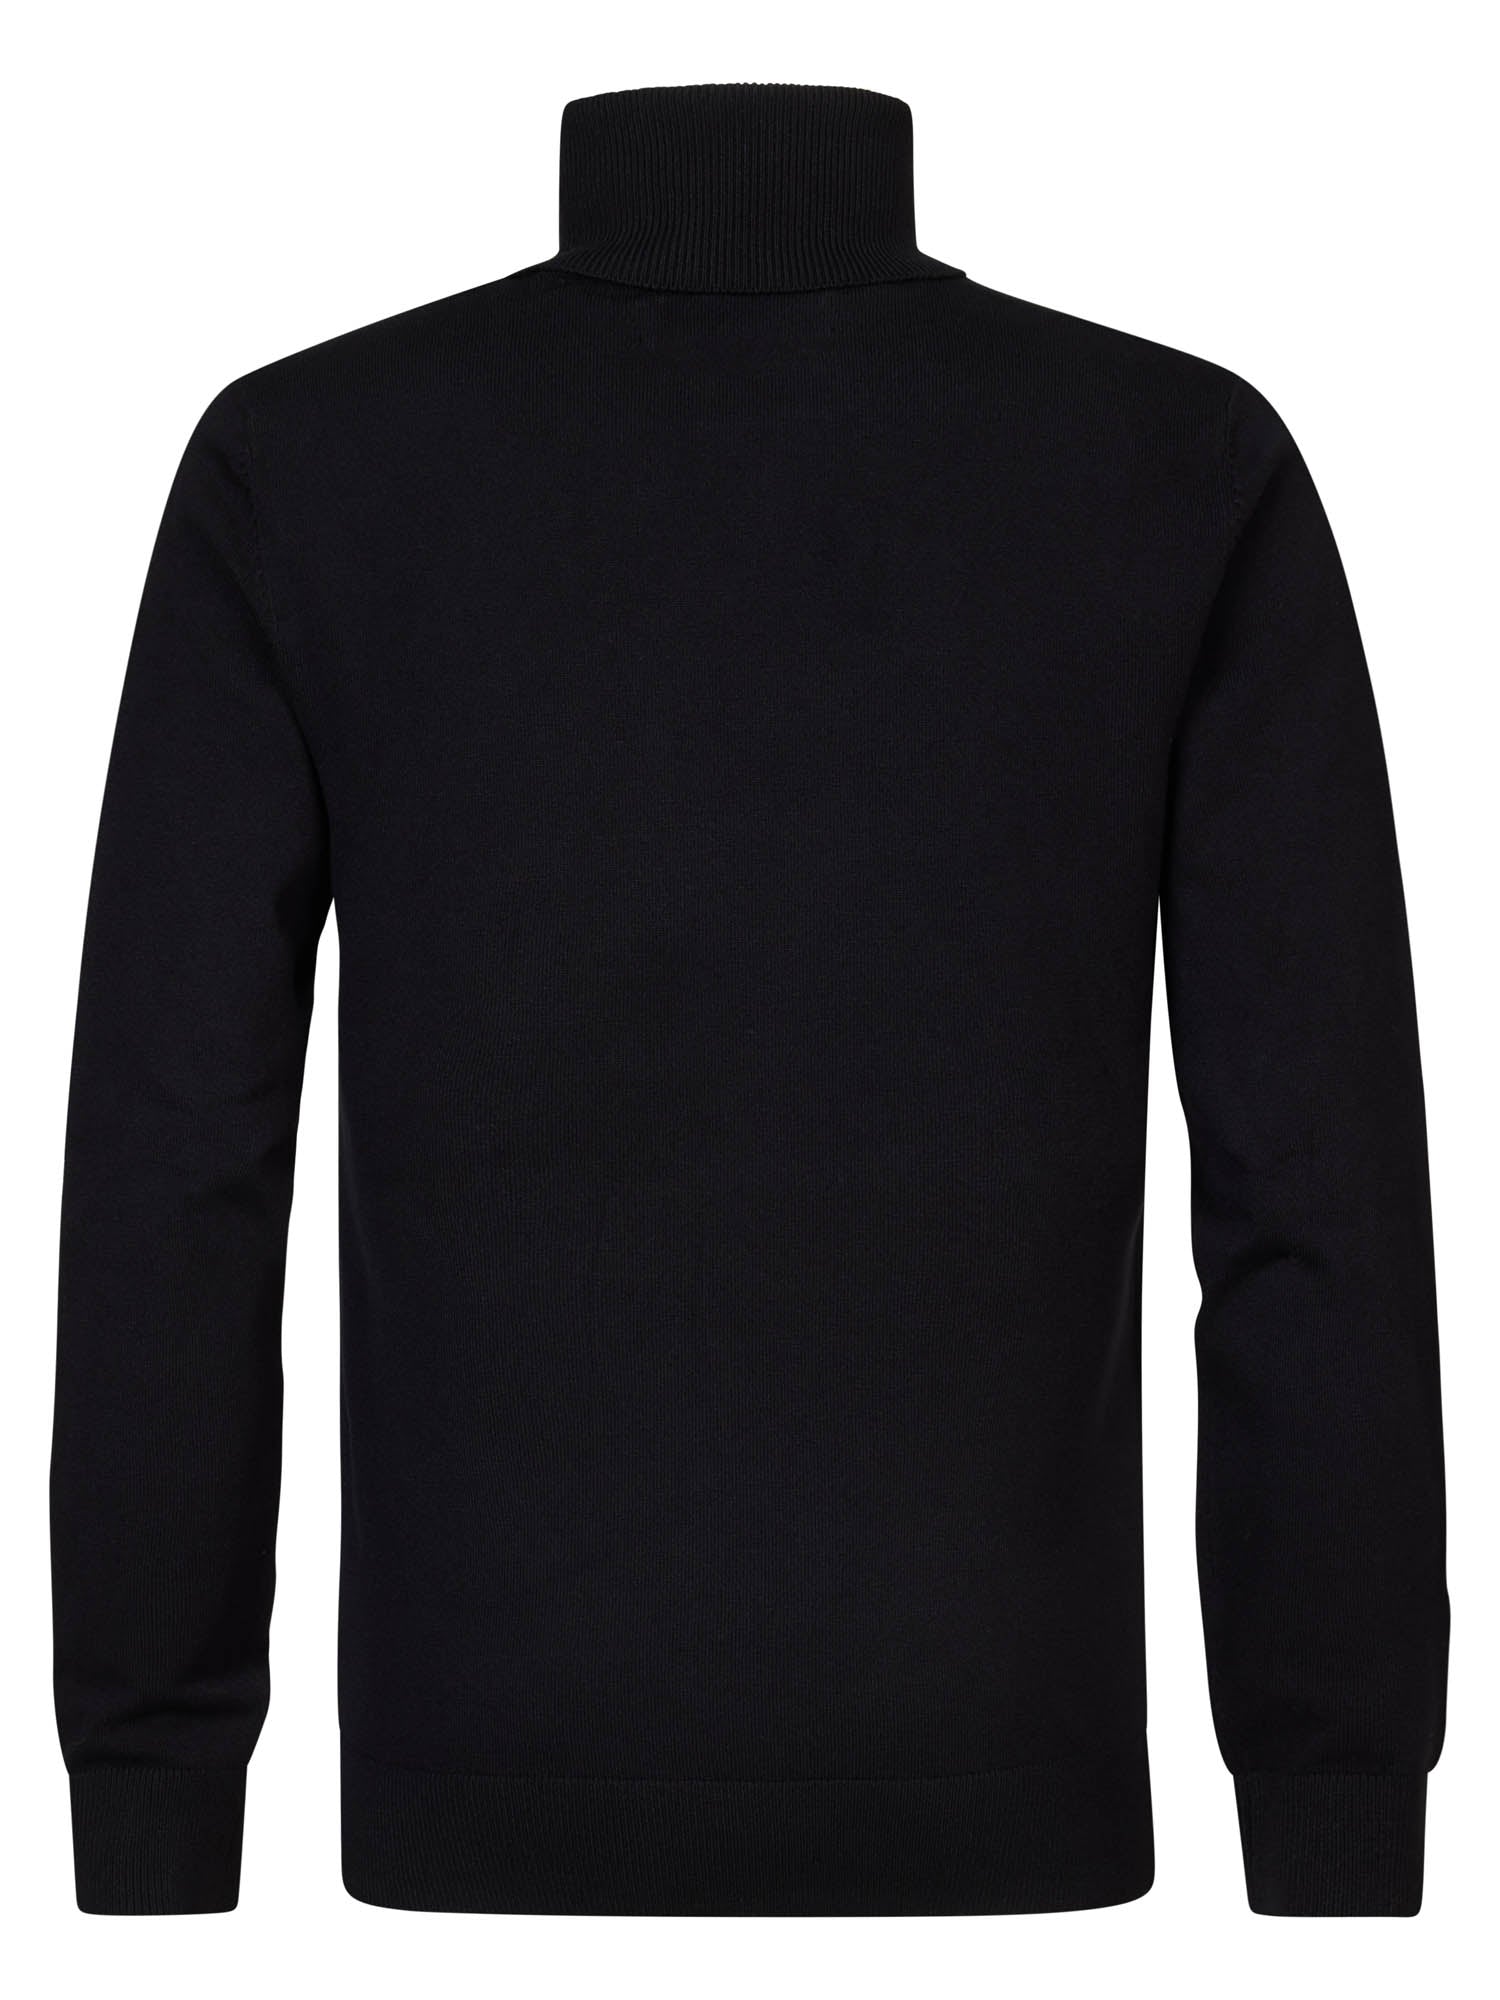 Jongens Knitwear Collar Basic van Petrol in de kleur Dark Black in maat 164.